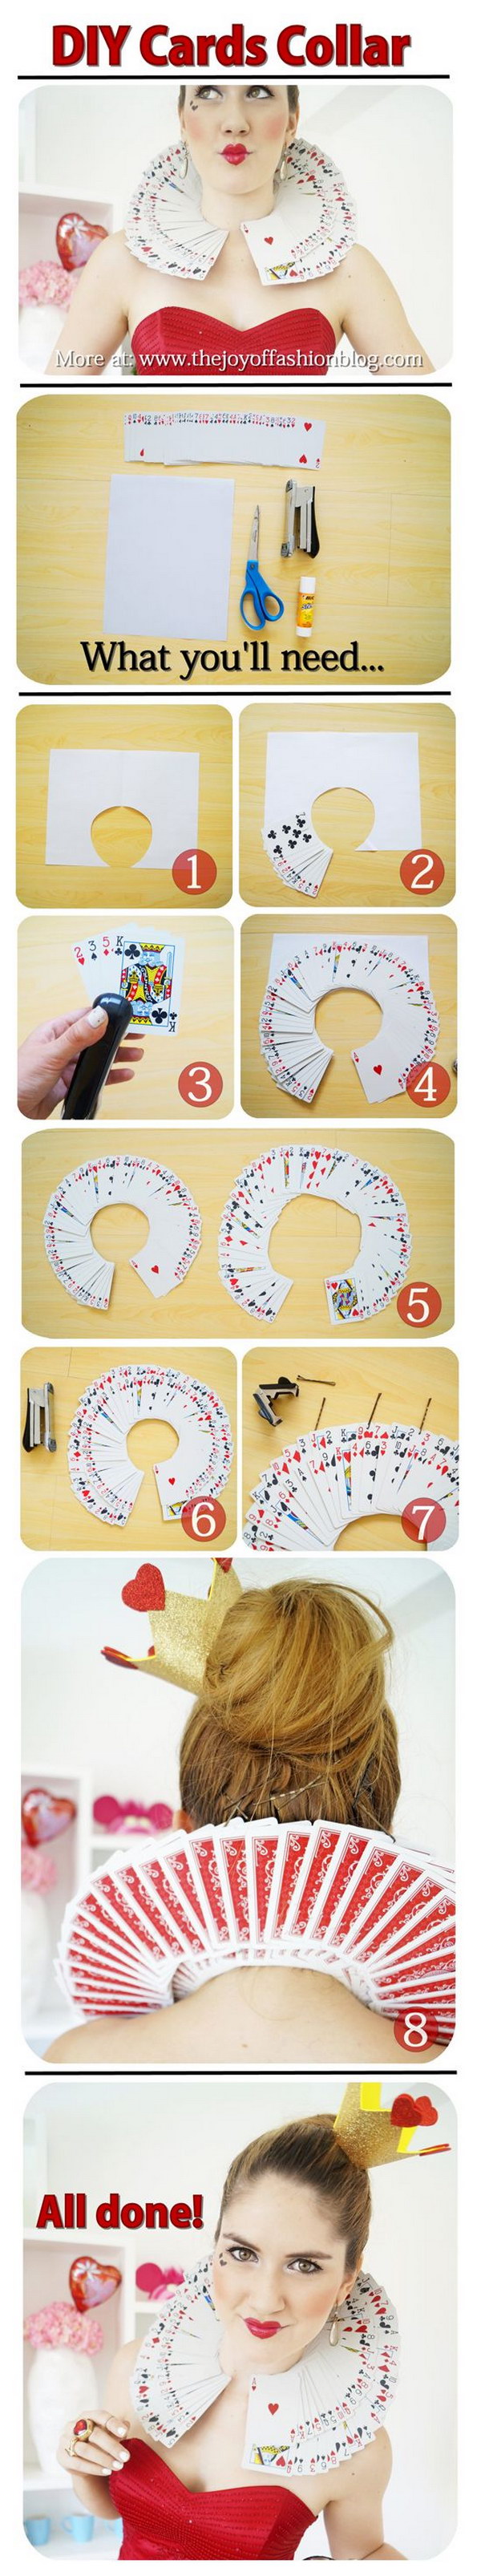 DIY Queen of Hearts Card Collar Tutorial. 